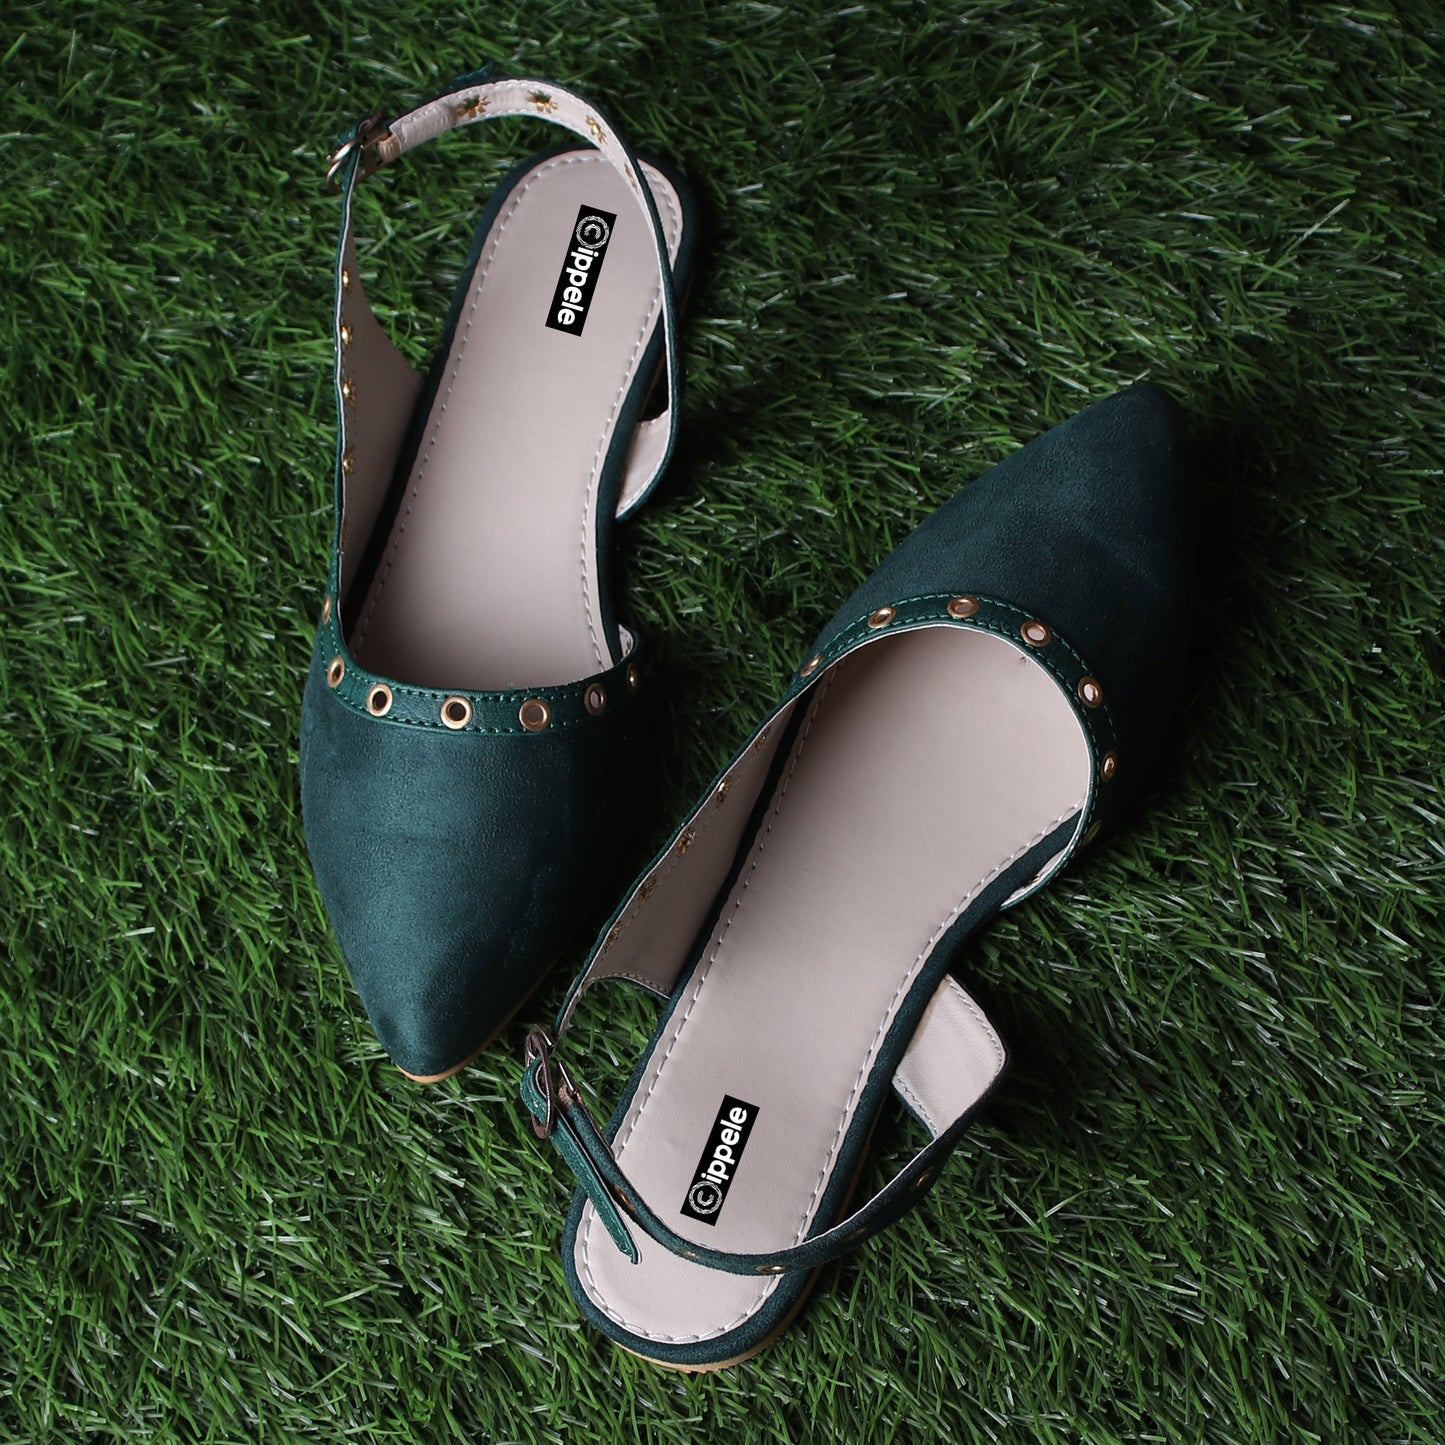 Foot Wear,The Misty Breezy Valentino In Green - Cippele Multi Store